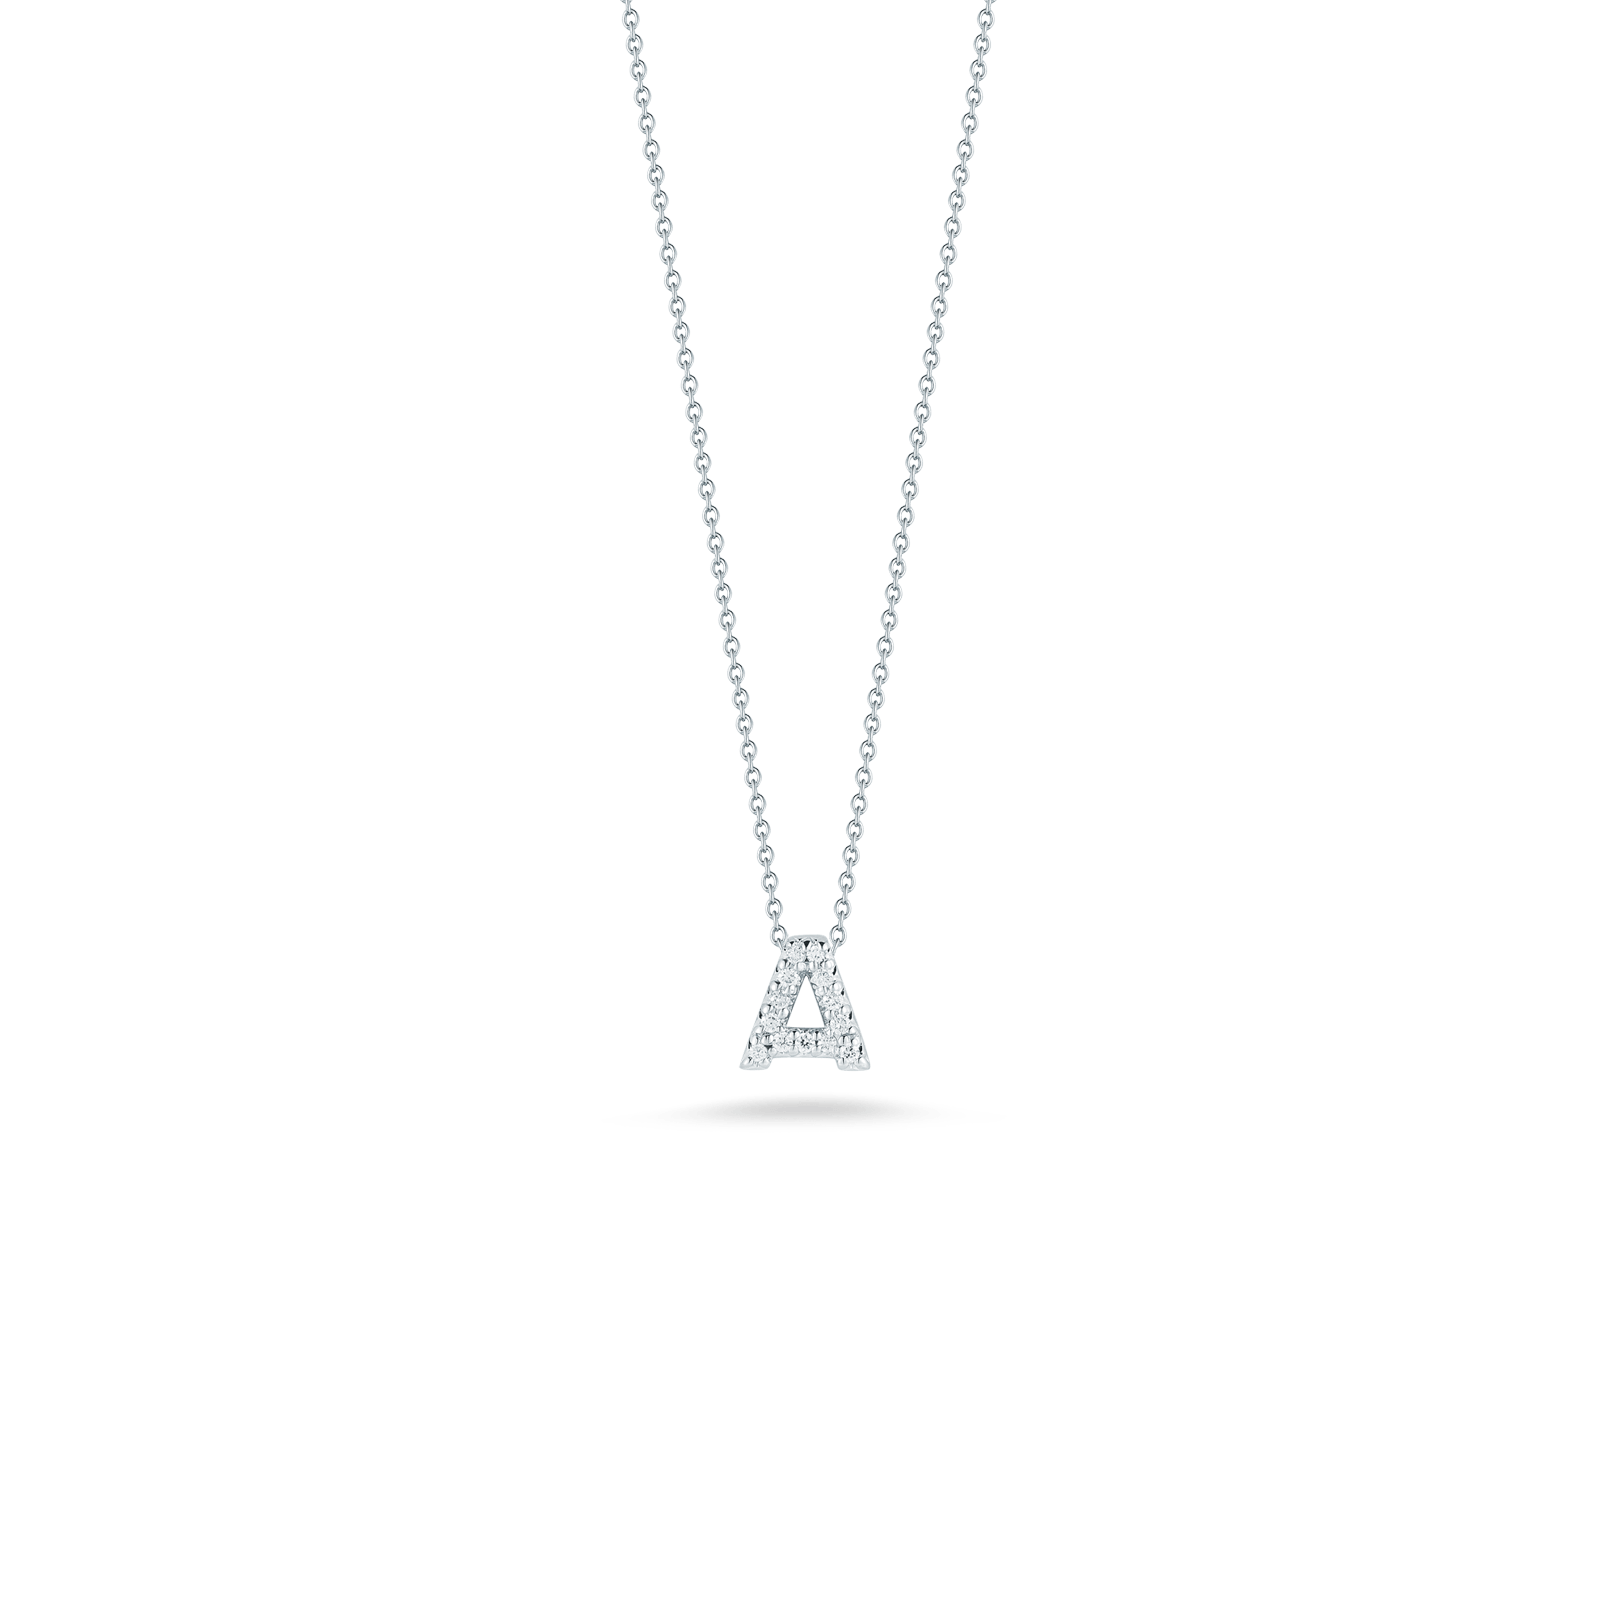 Roberto Coin 18K Diamond Love Letter Necklace "A"